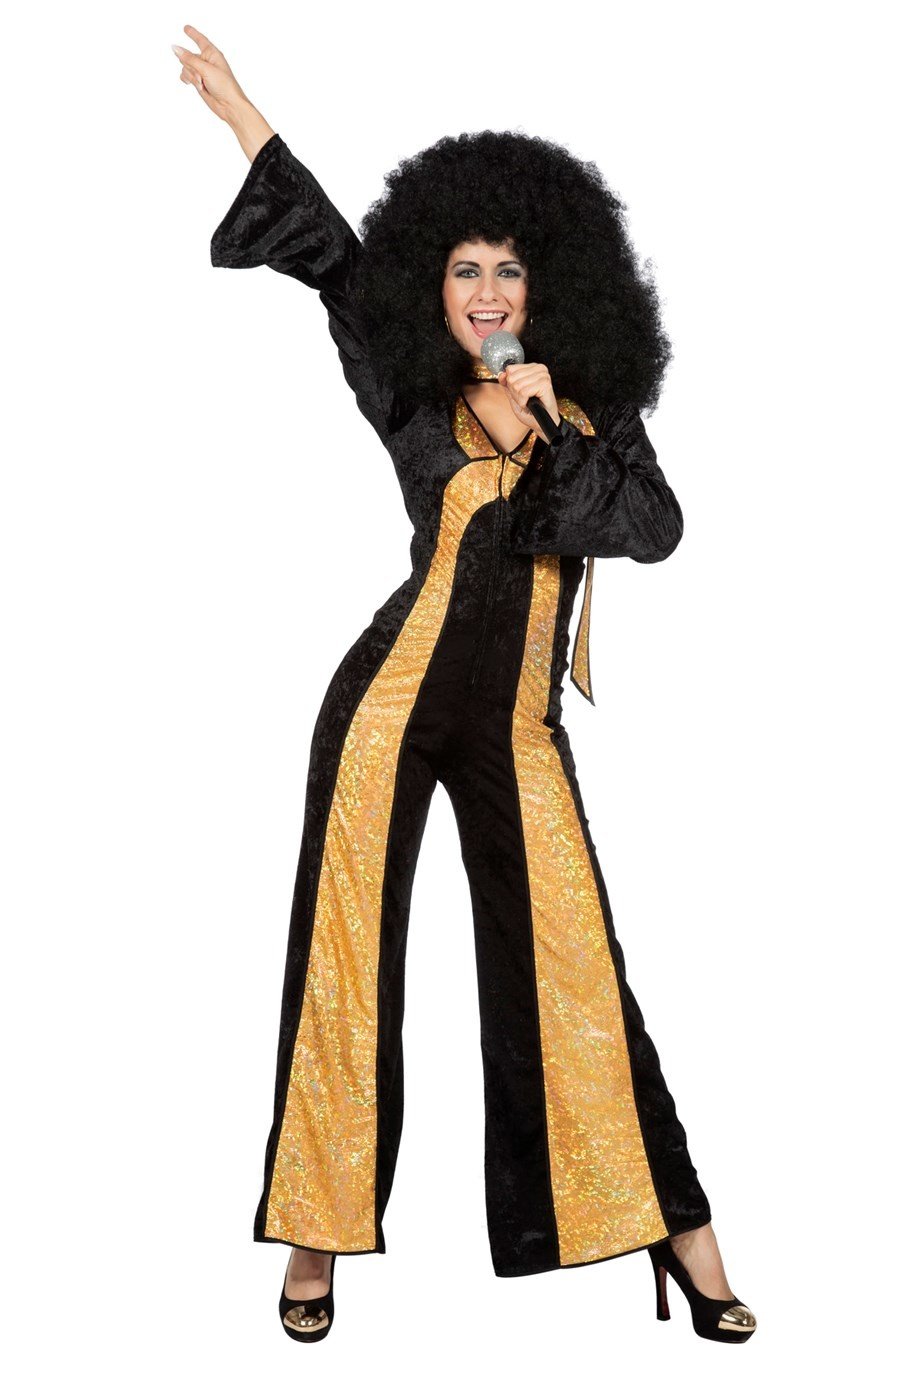 Wilbers - Jaren 80 & 90 Kostuum - Catsuit Disco Diva Chaka Khan - Vrouw - zwart,goud - Maat 36 - Carnavalskleding - Verkleedkleding